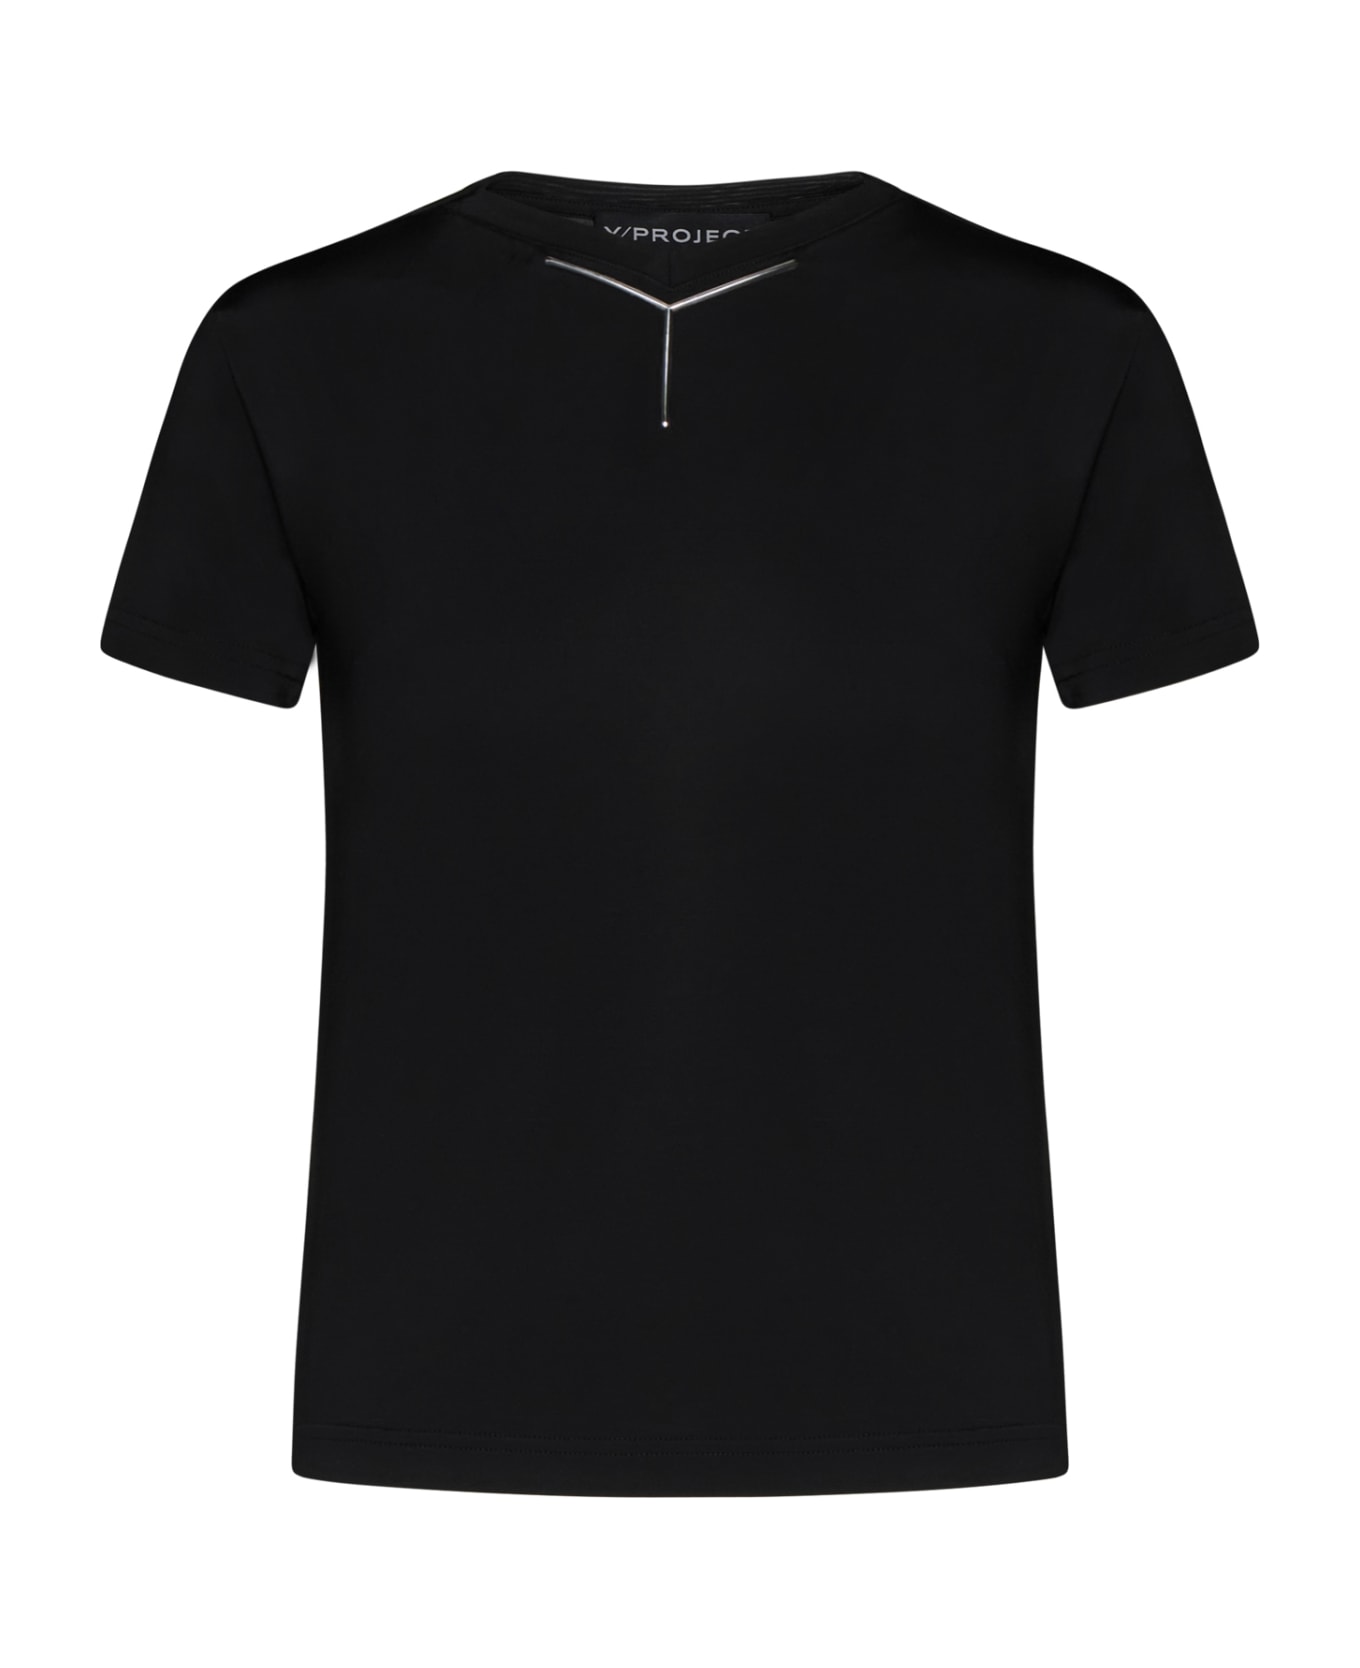 Y/Project T-Shirt - Black